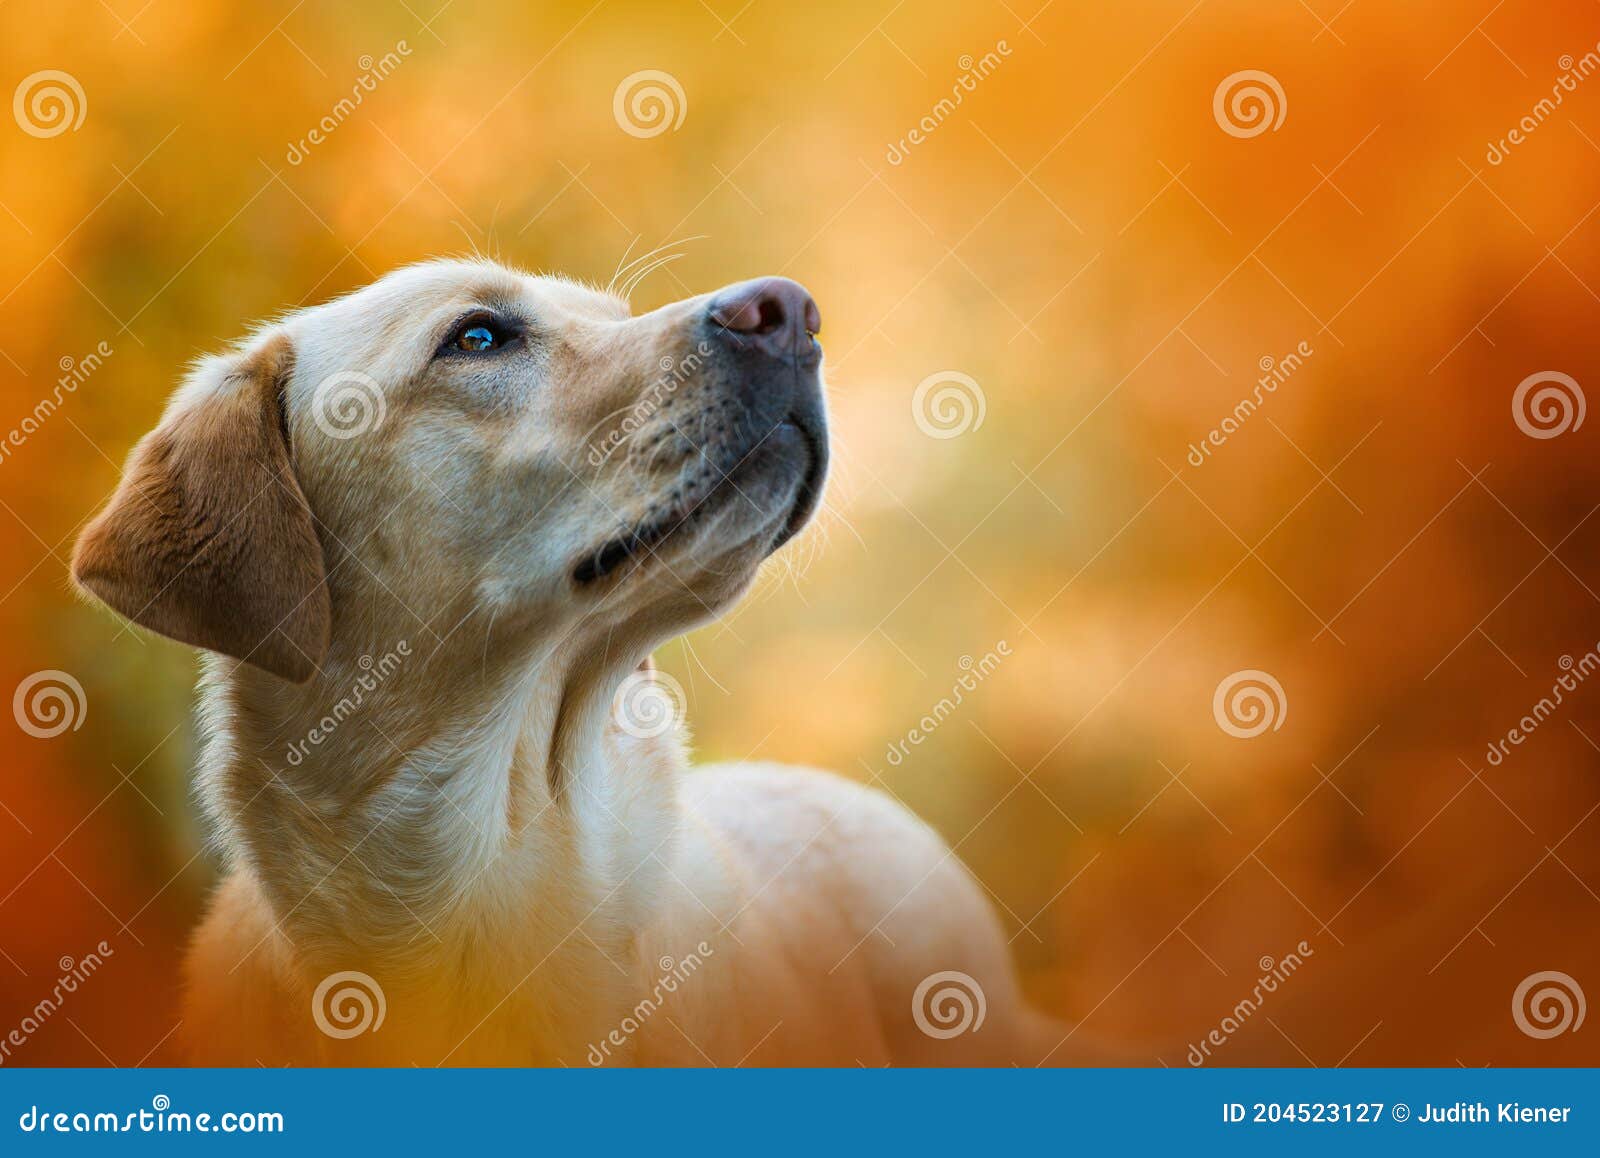 labrador dog standing in autumn landscape